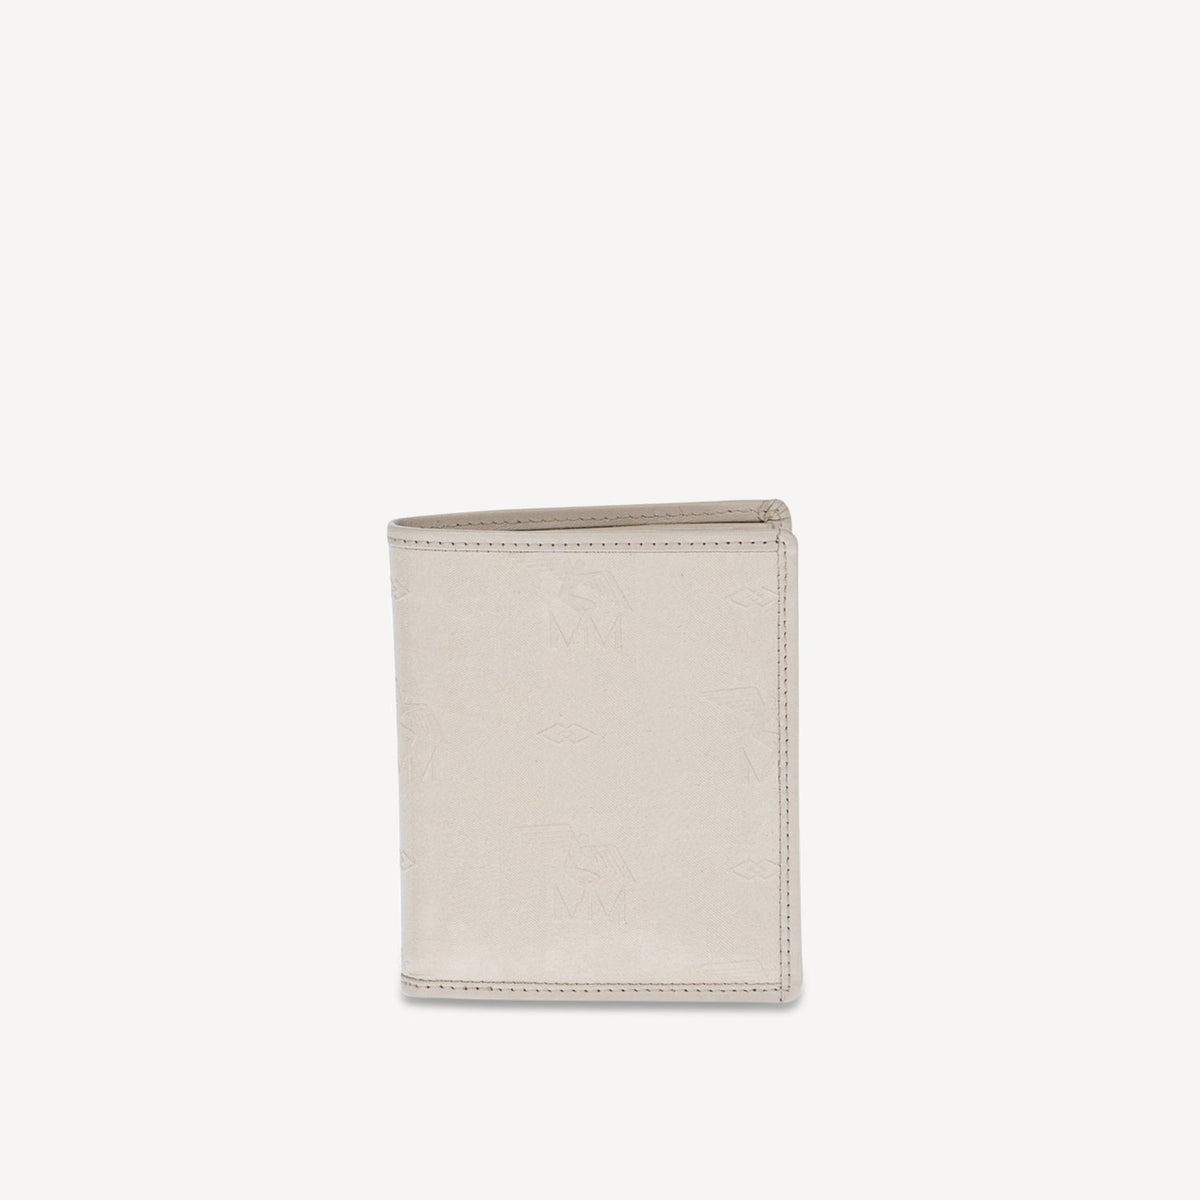 BEVERIN | Portemonnaie pearl weiß/silber